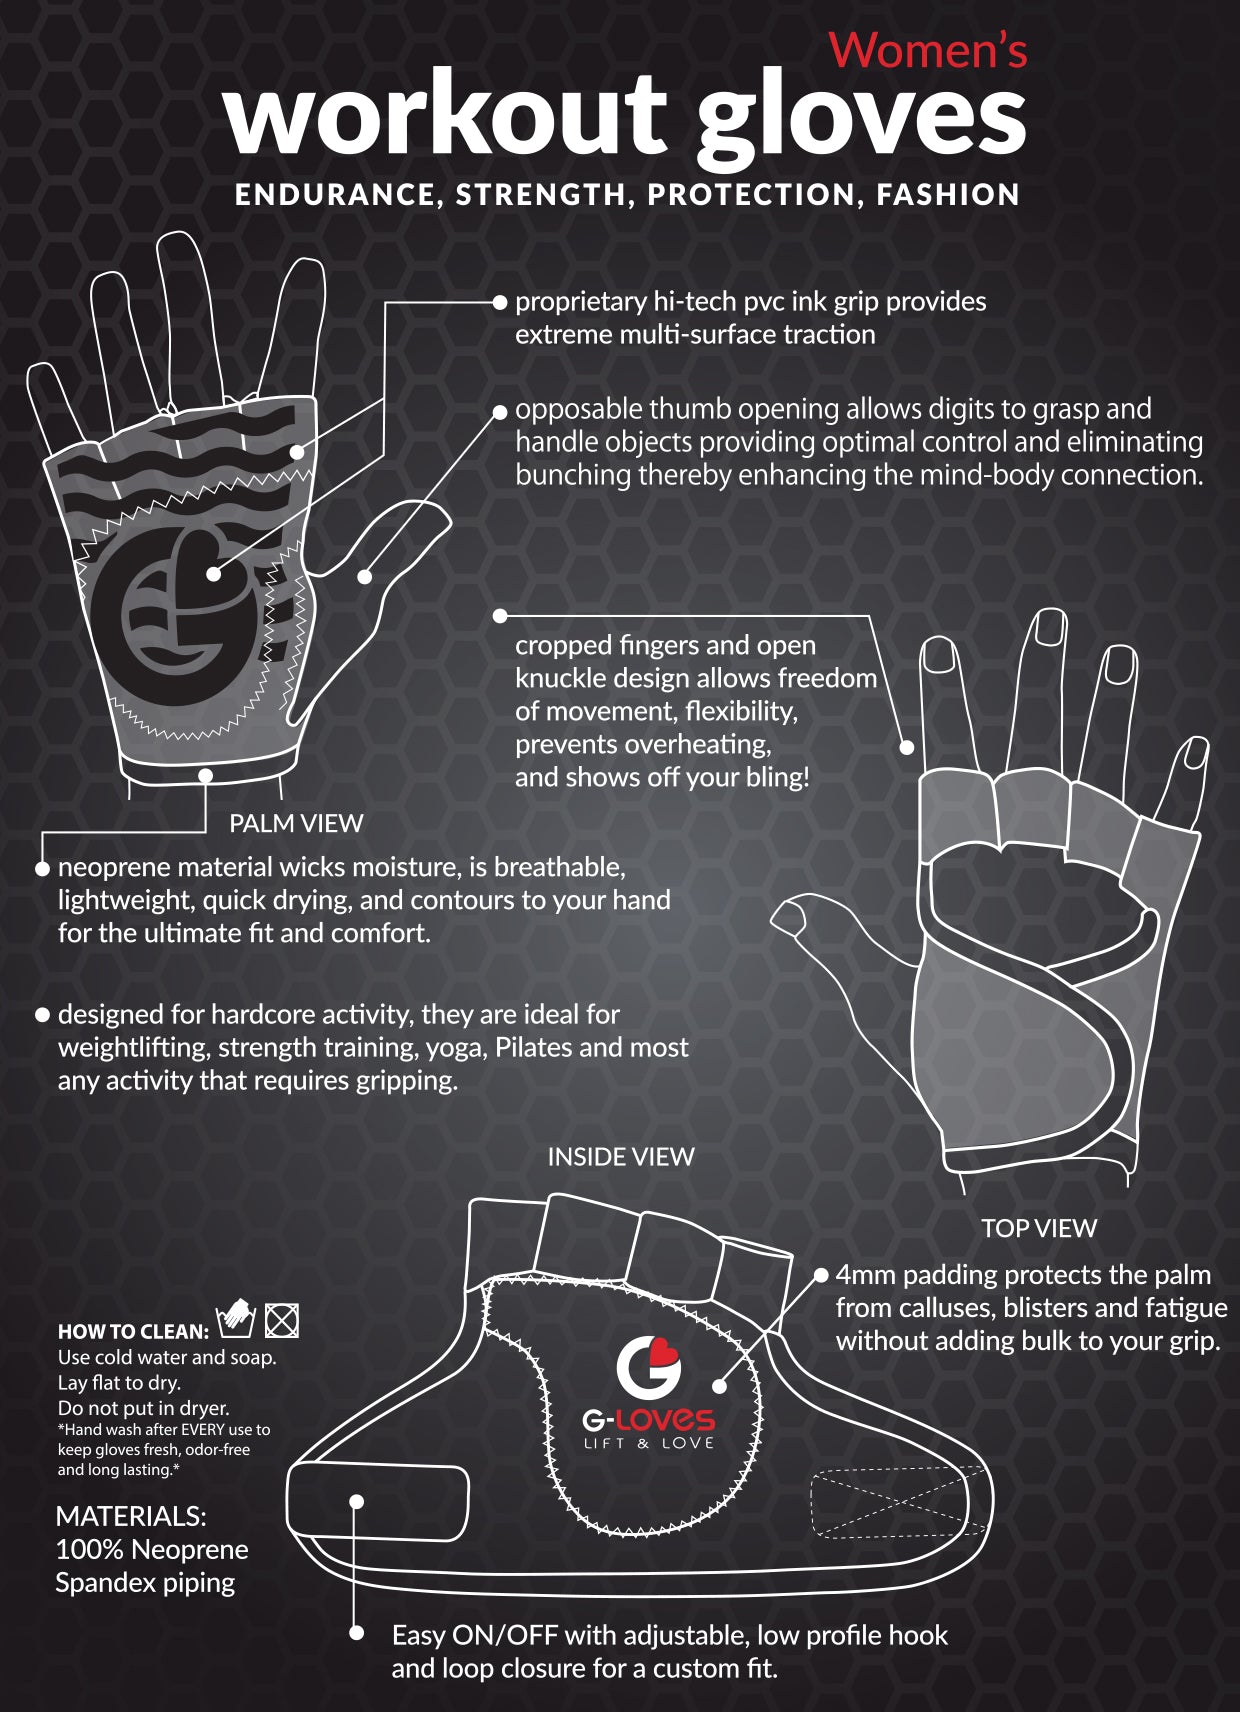 Workout gloves technology